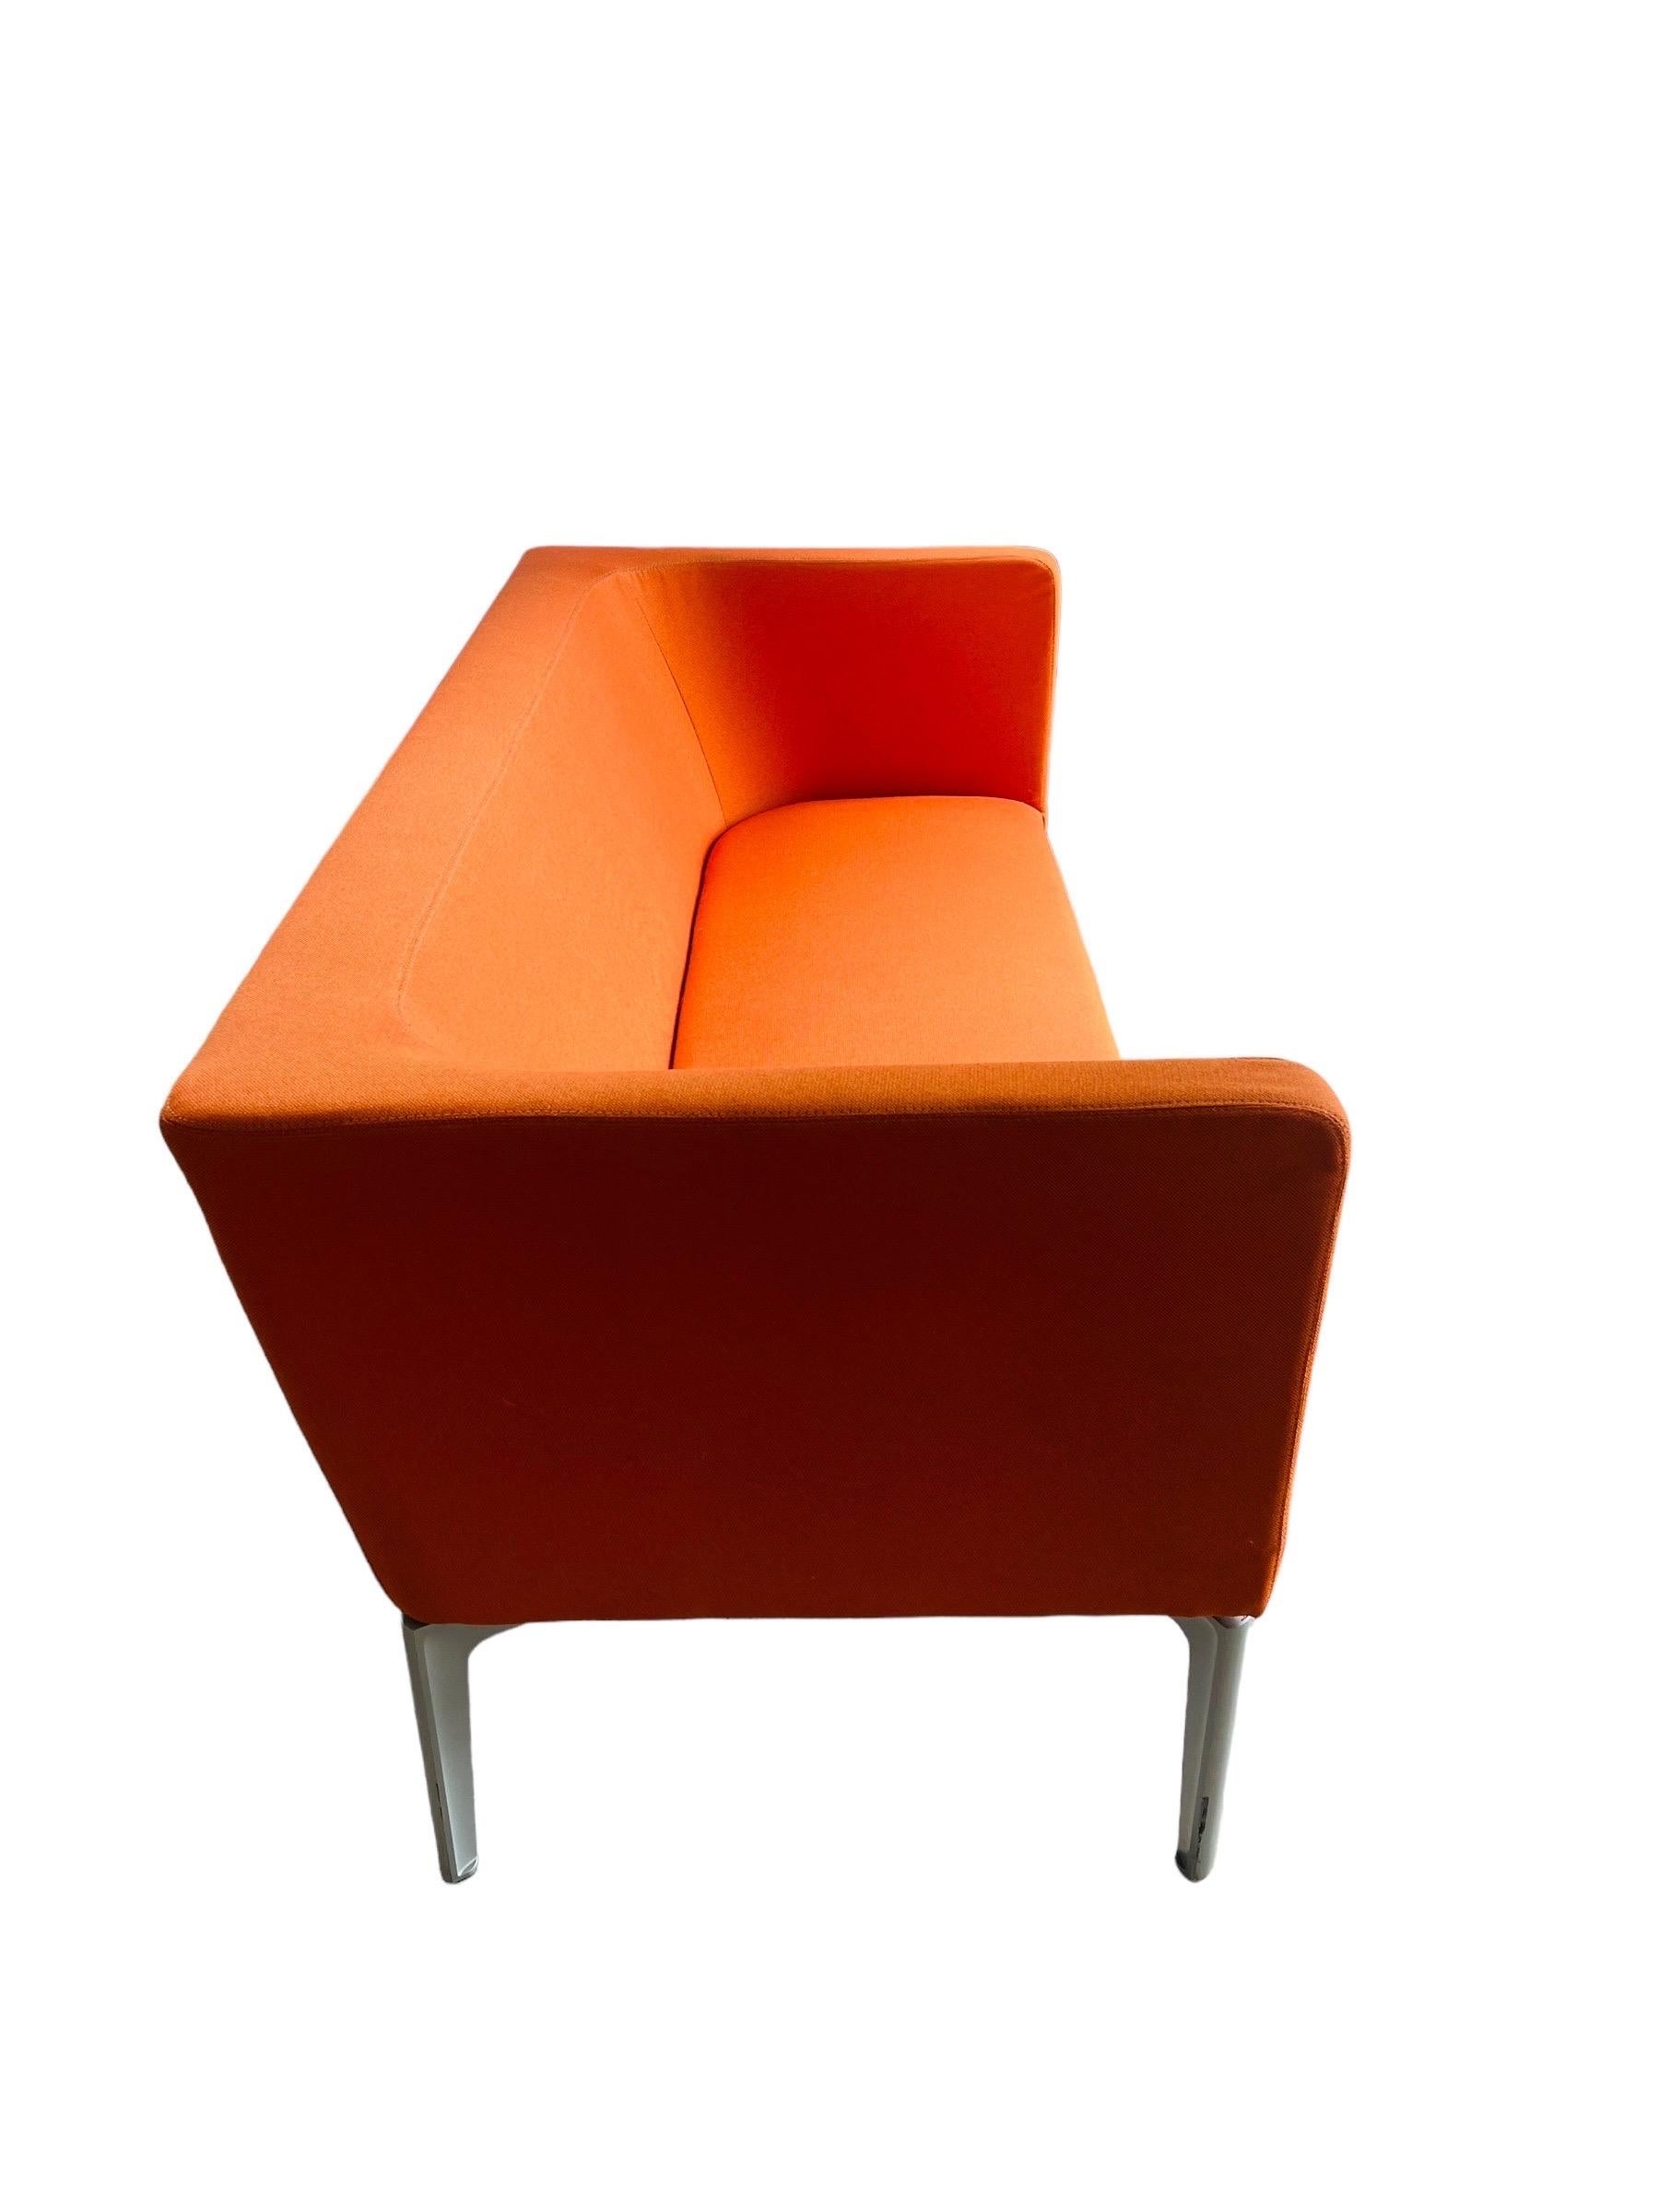 Steelcase Bivi Rumble Seat Collection: Vibrant Orange Modern Sofa 7